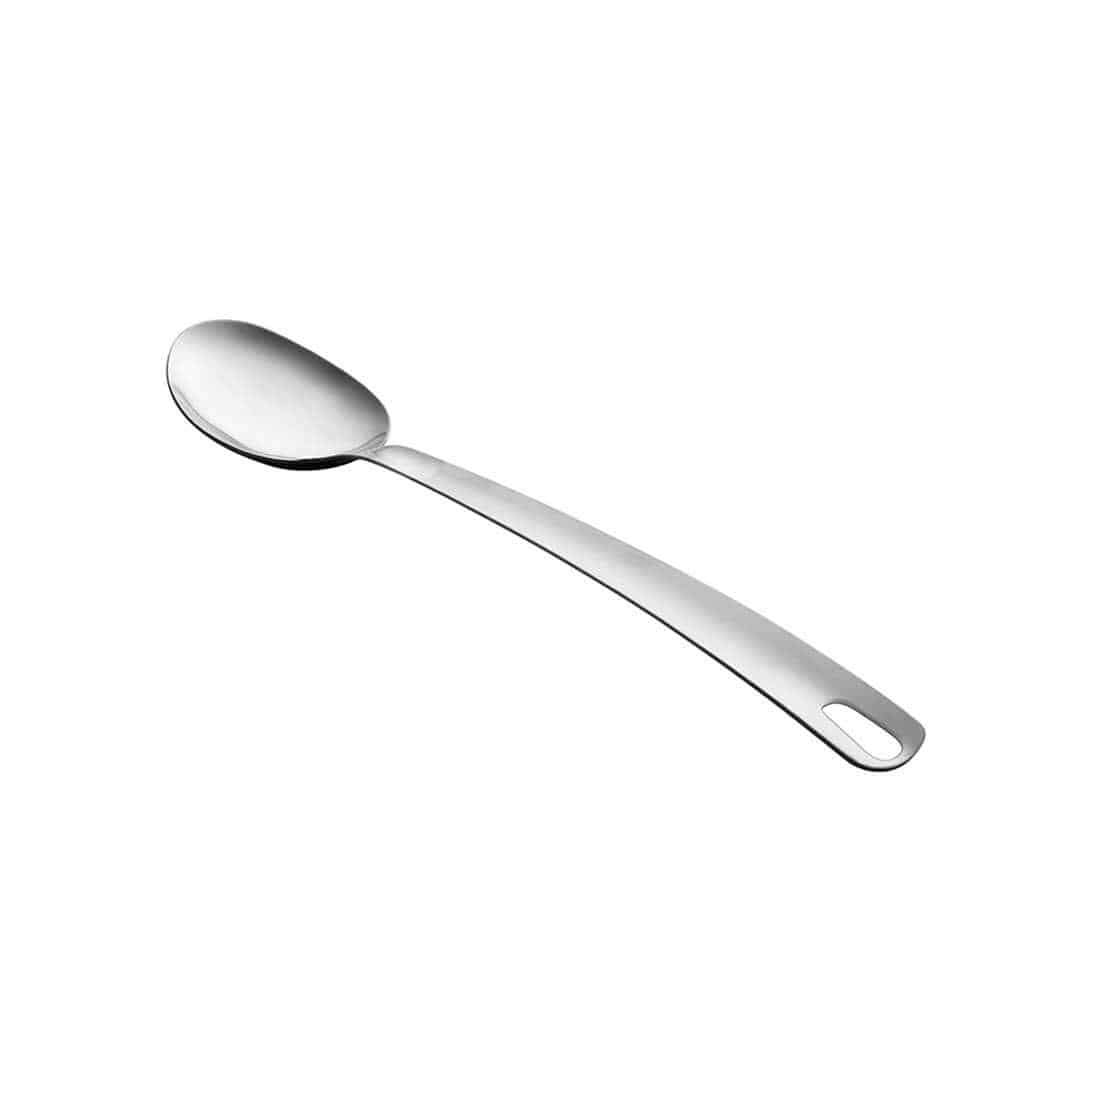 JAGDAMBA CUTLERY LIMITED Daily Needs 2 PCS Basting spoon Kitchen tool - LD